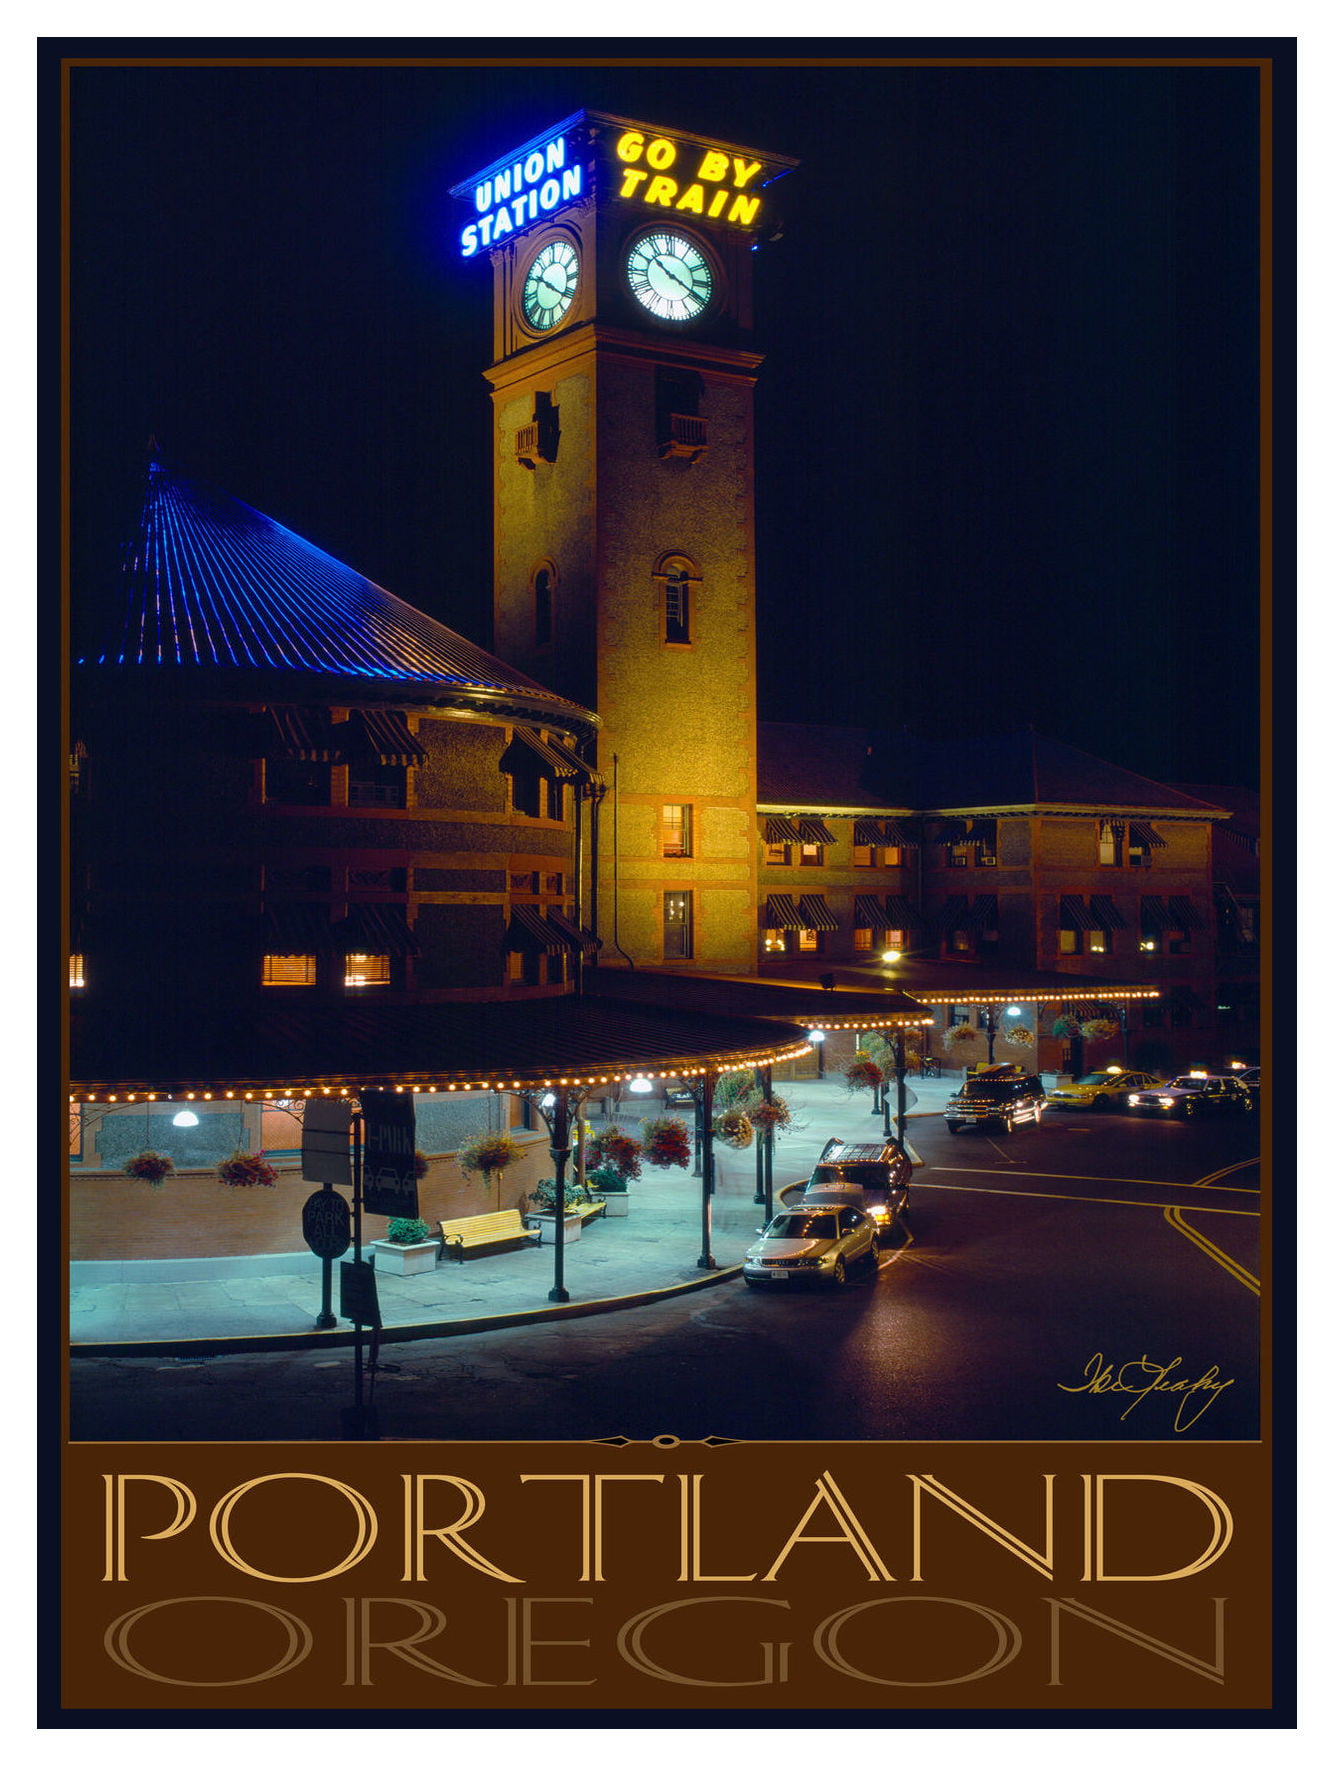 Clock Tower at Union Station Portland Oregon Photo Art Print Poster 18x12 inch